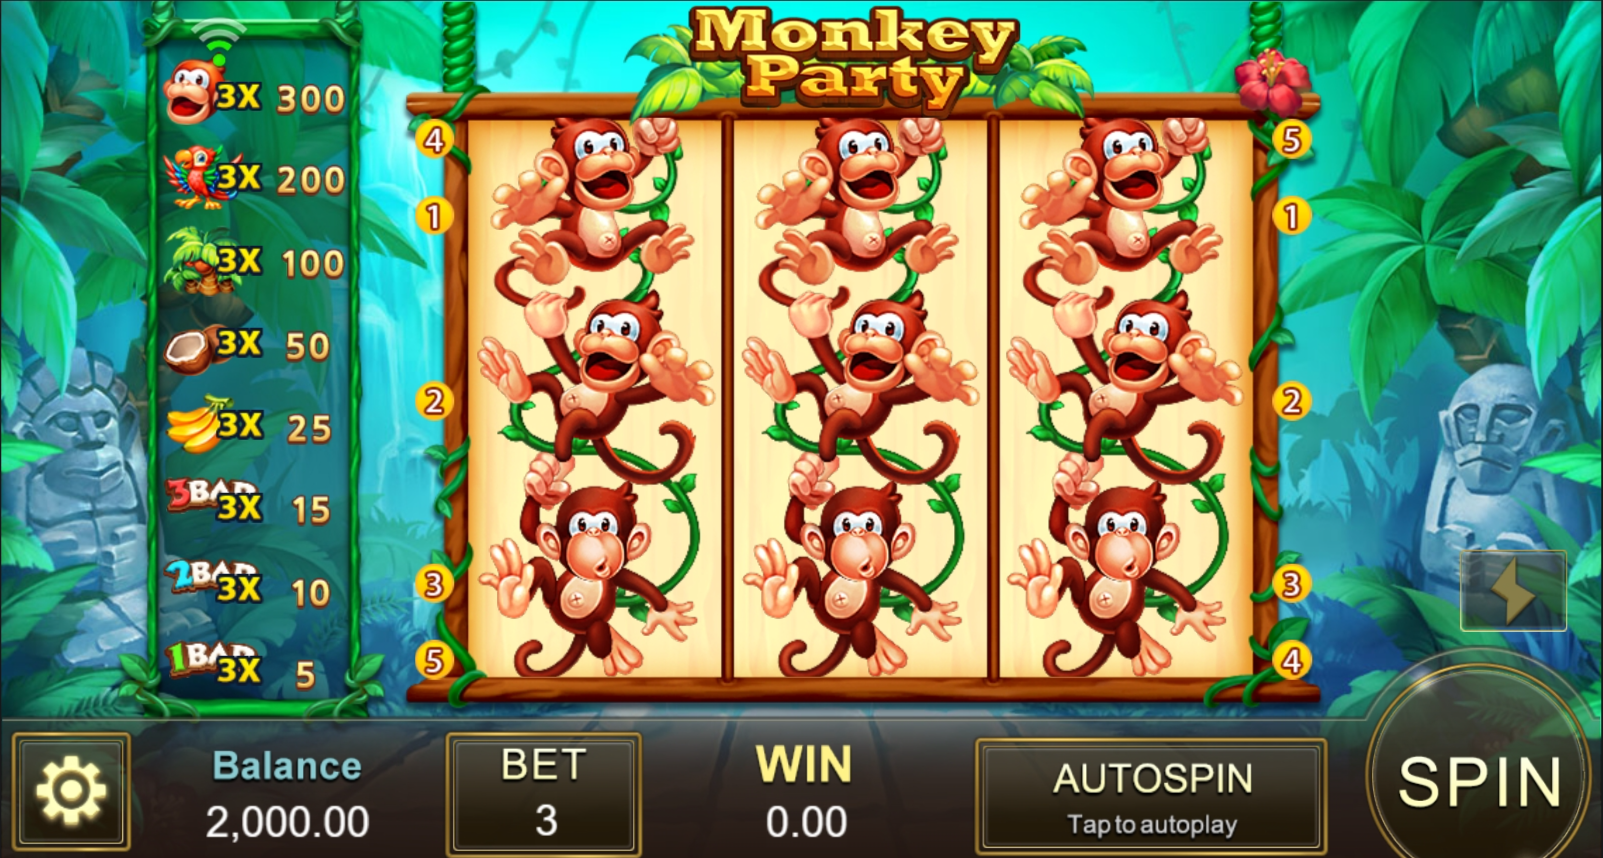 Monkey Party ทดลองเล่น Jili Slot เข้าสู่ระบบ เครดิตฟรี